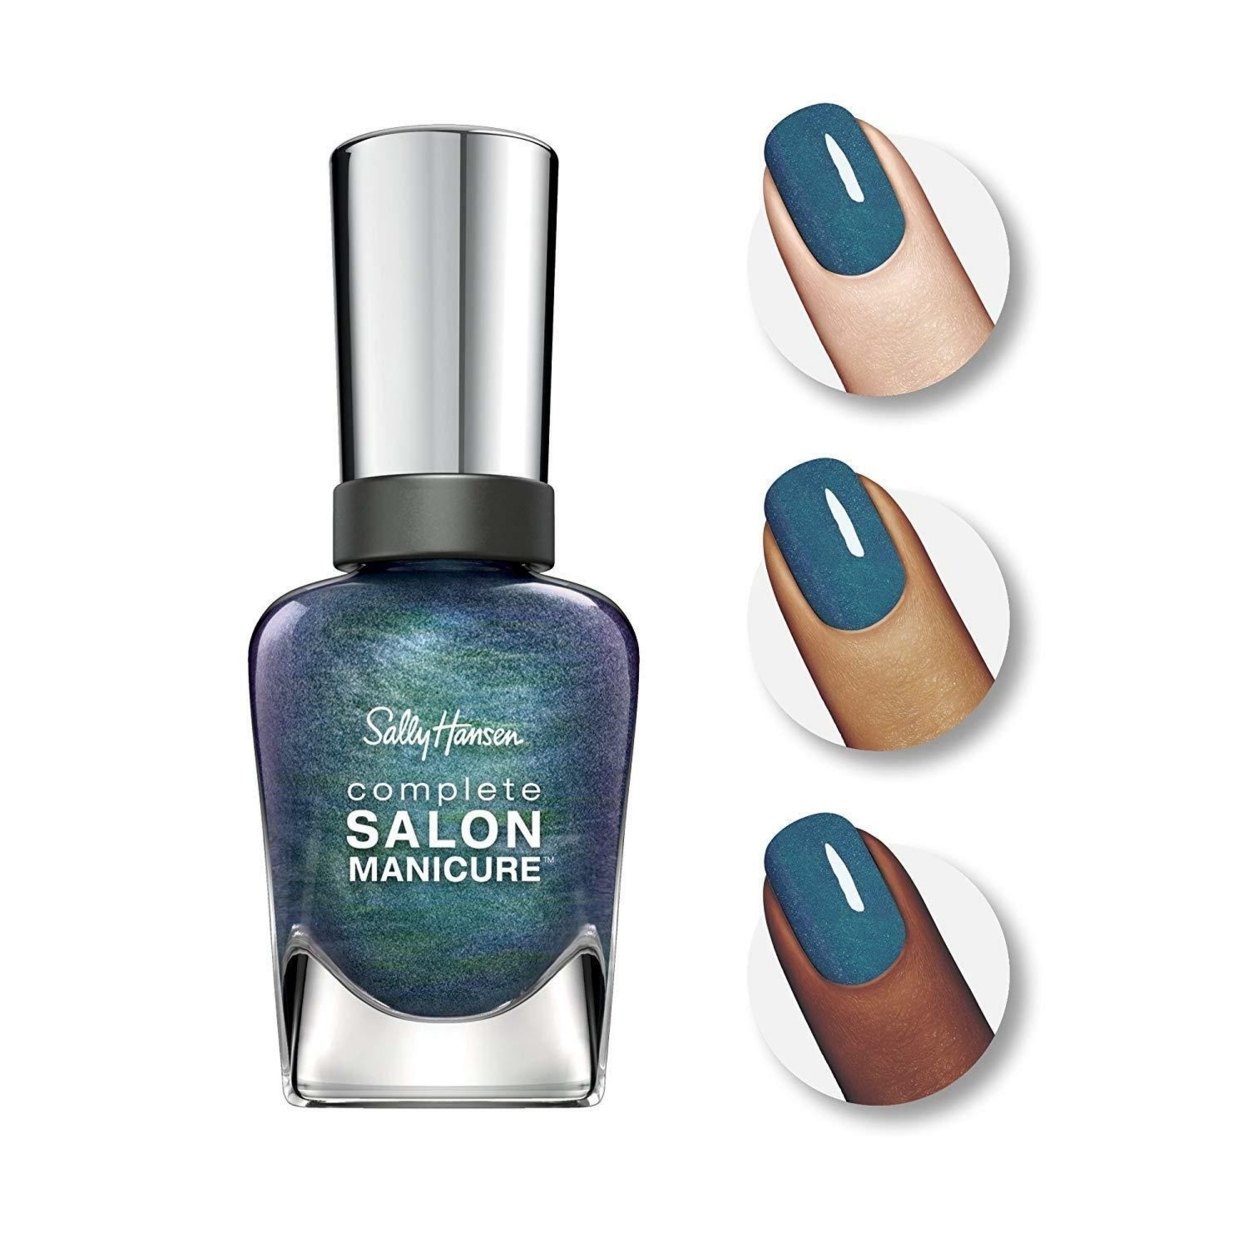 Sally Hansen Complete Salon Manicure - 581 Black and Blue 0.5 oz Nail Polish - image 3 of 4